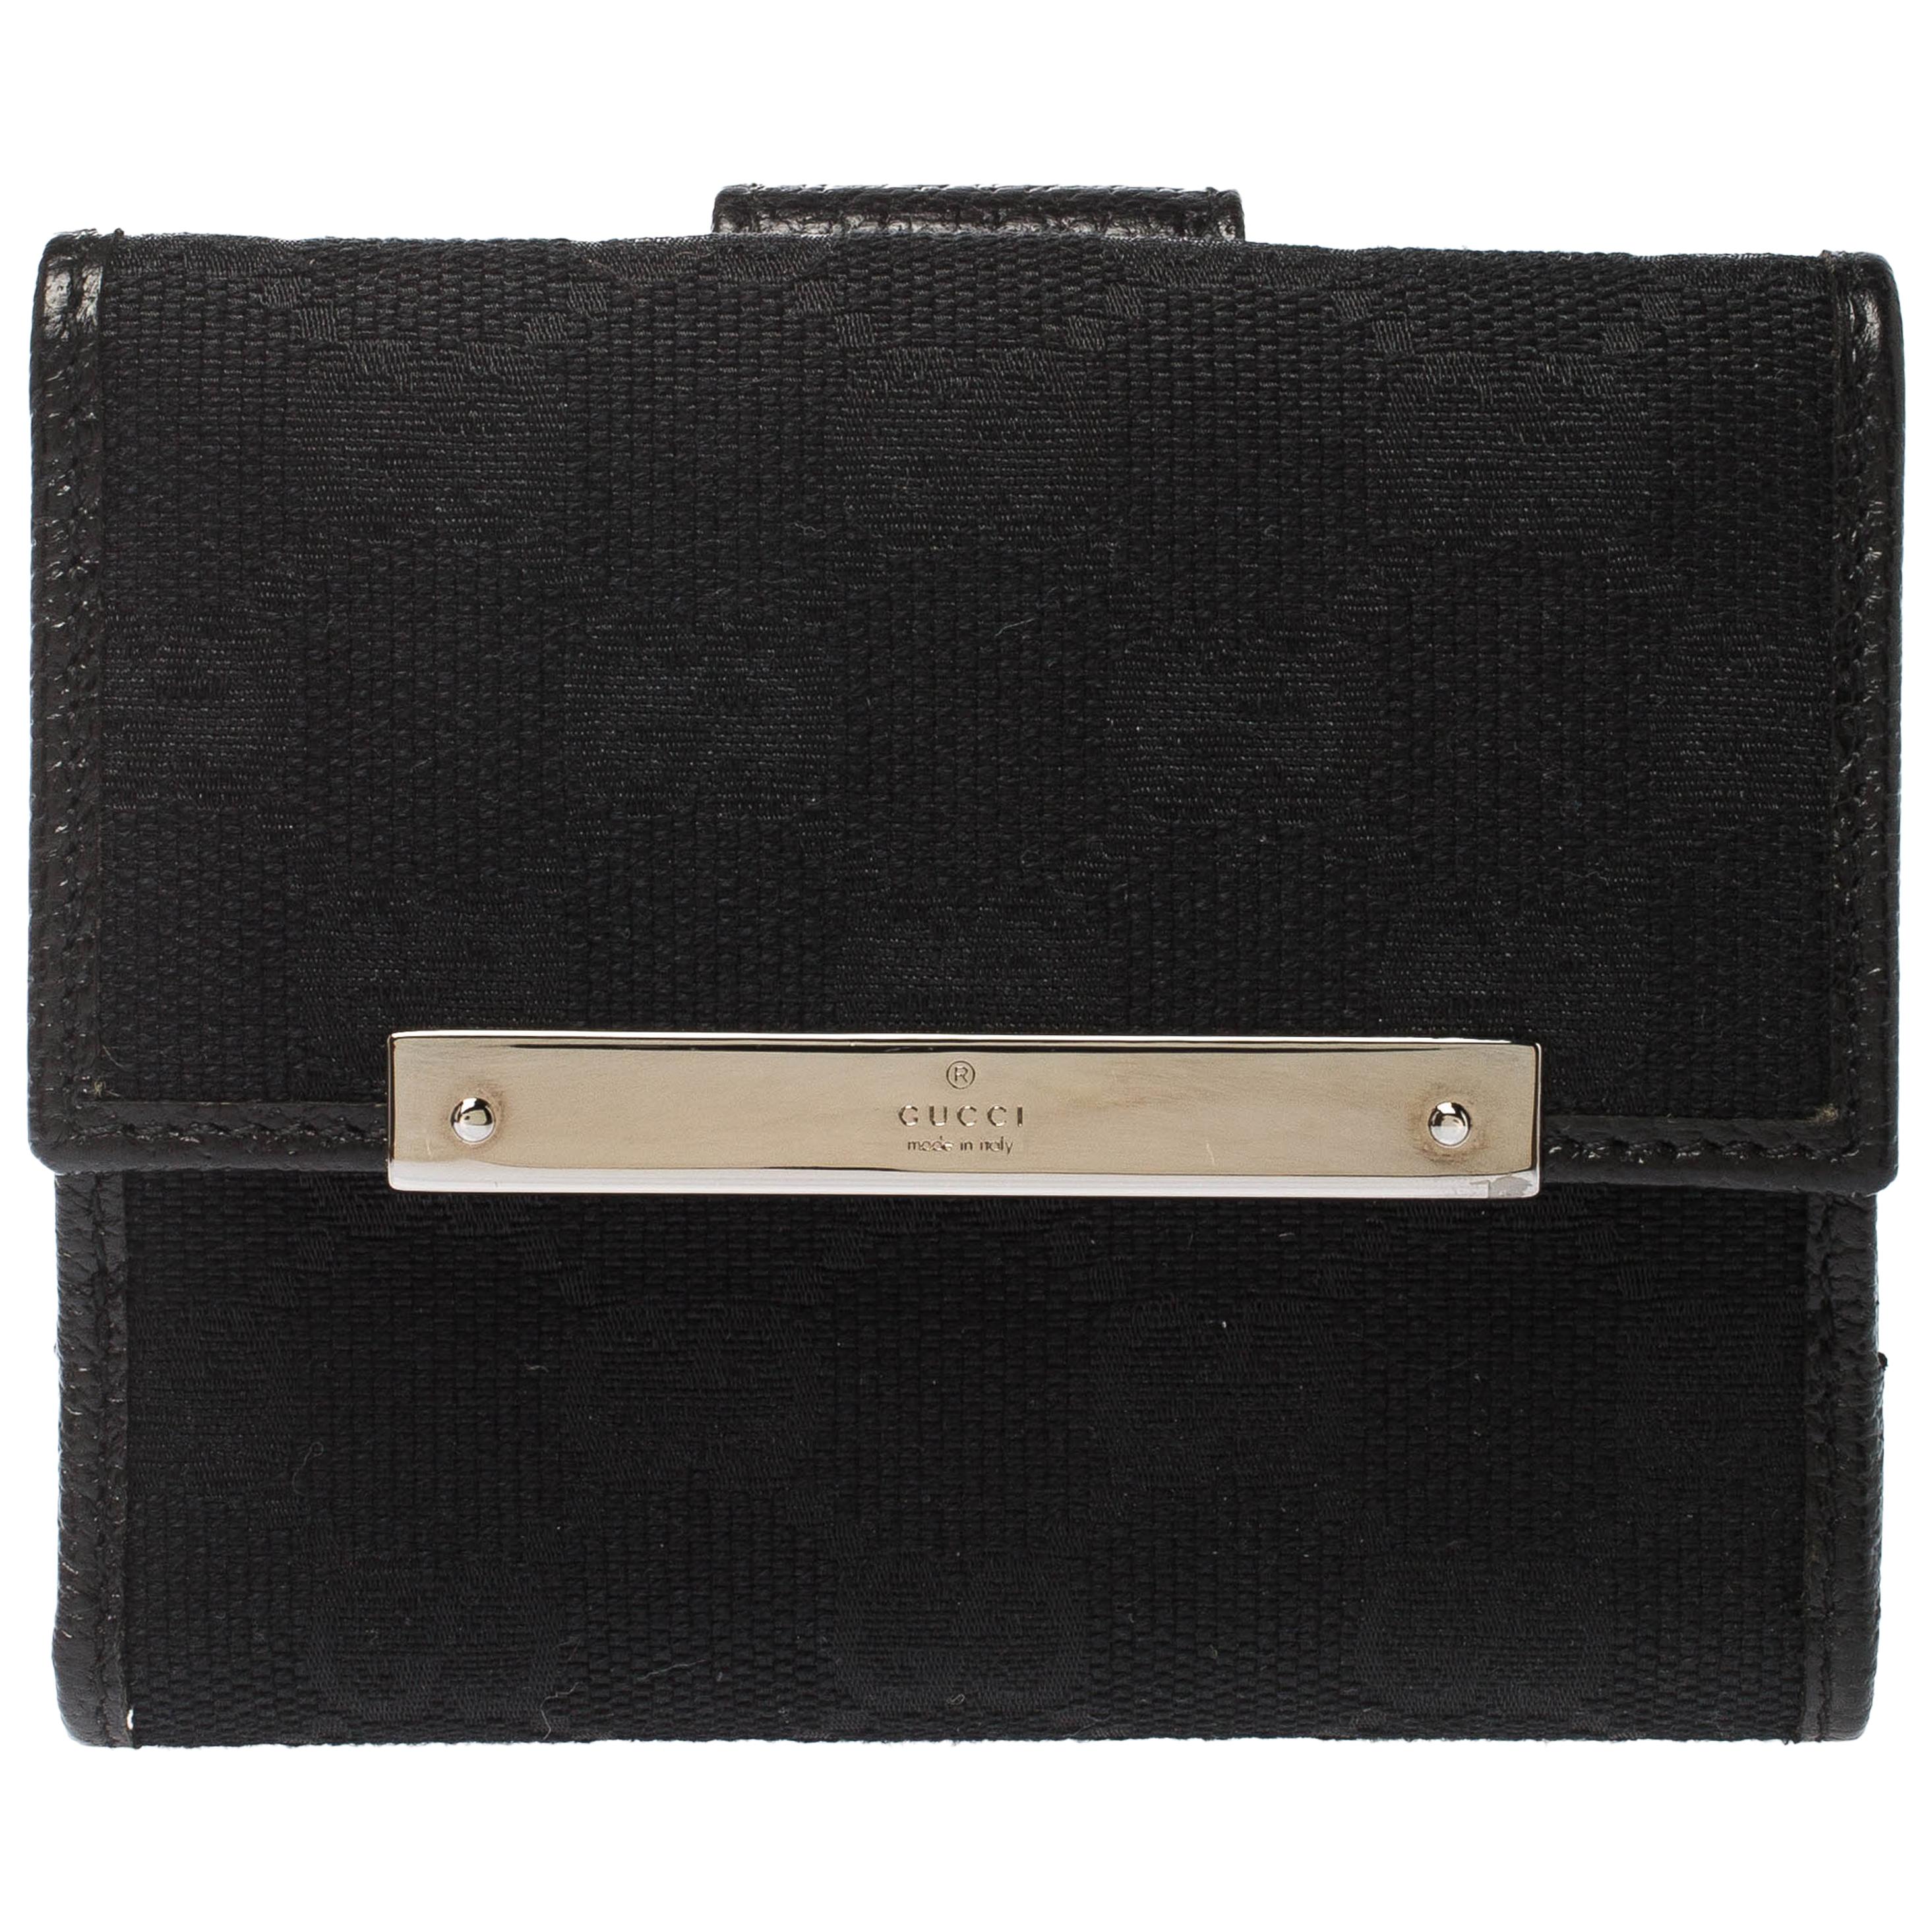 Gucci Black Guccissima Leather Mini Flap French Wallet